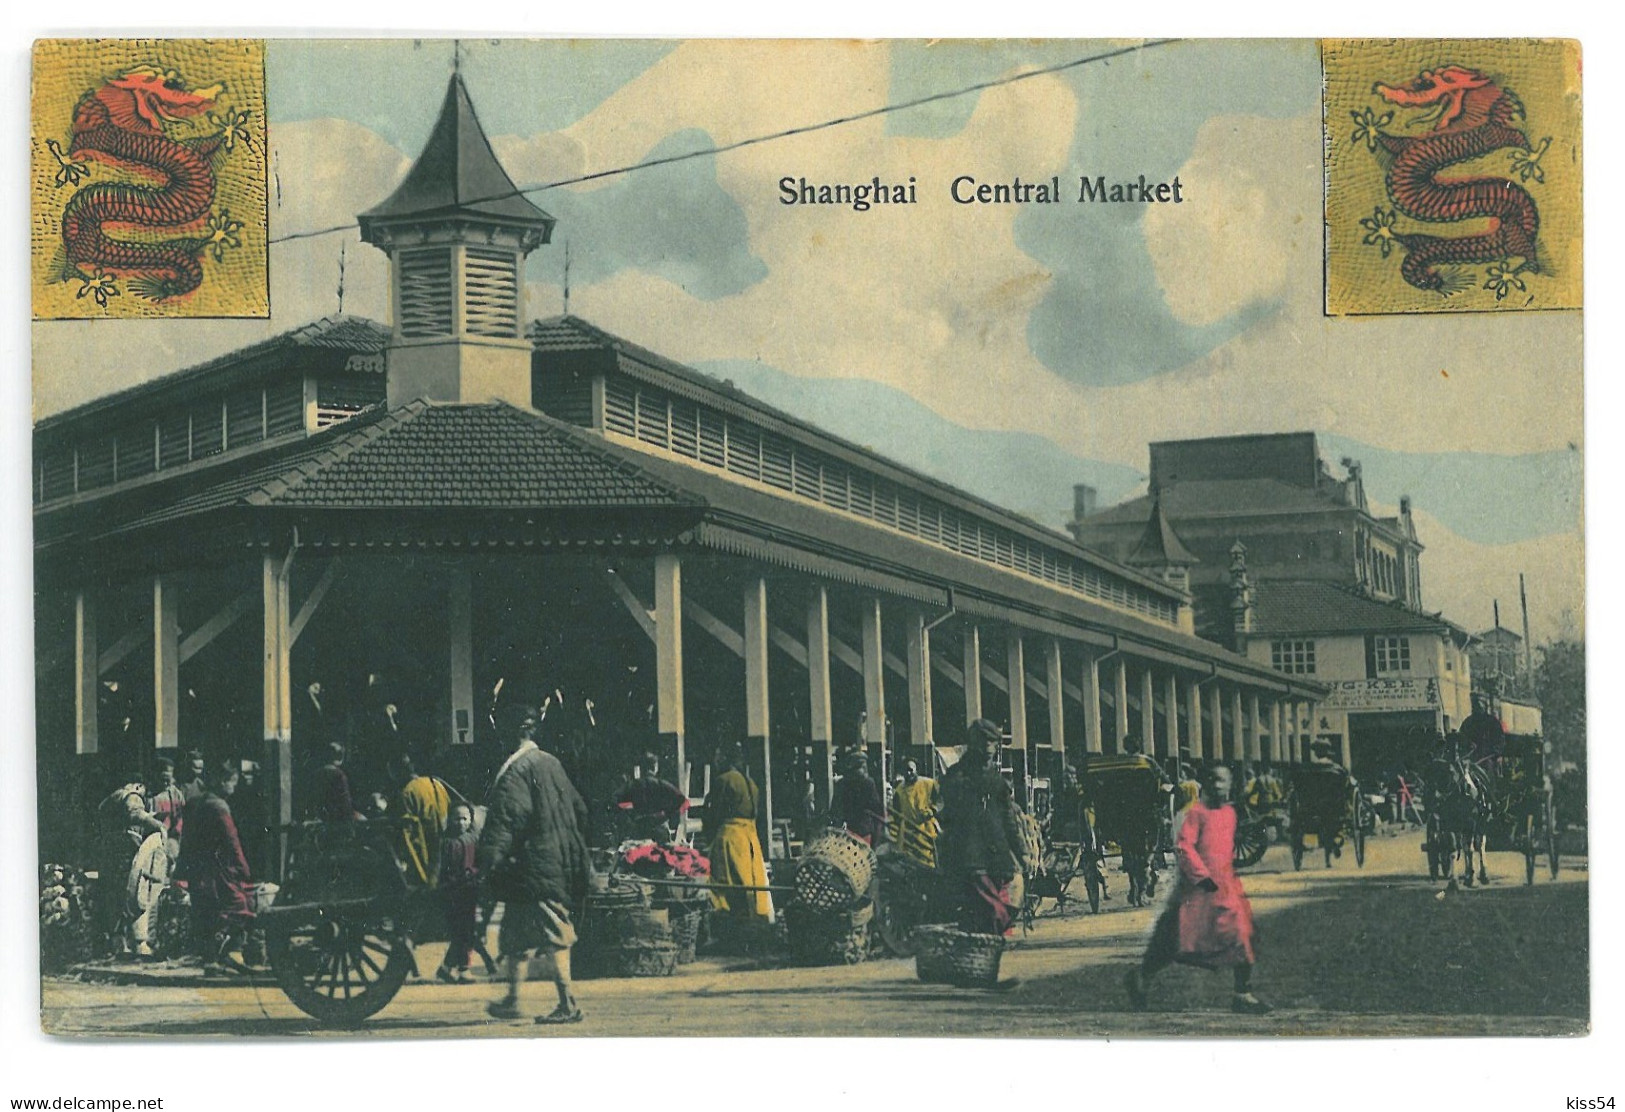 CH 57 - 20478 SHANGHAI, Market, China - Old Postcard - Unused - Cina